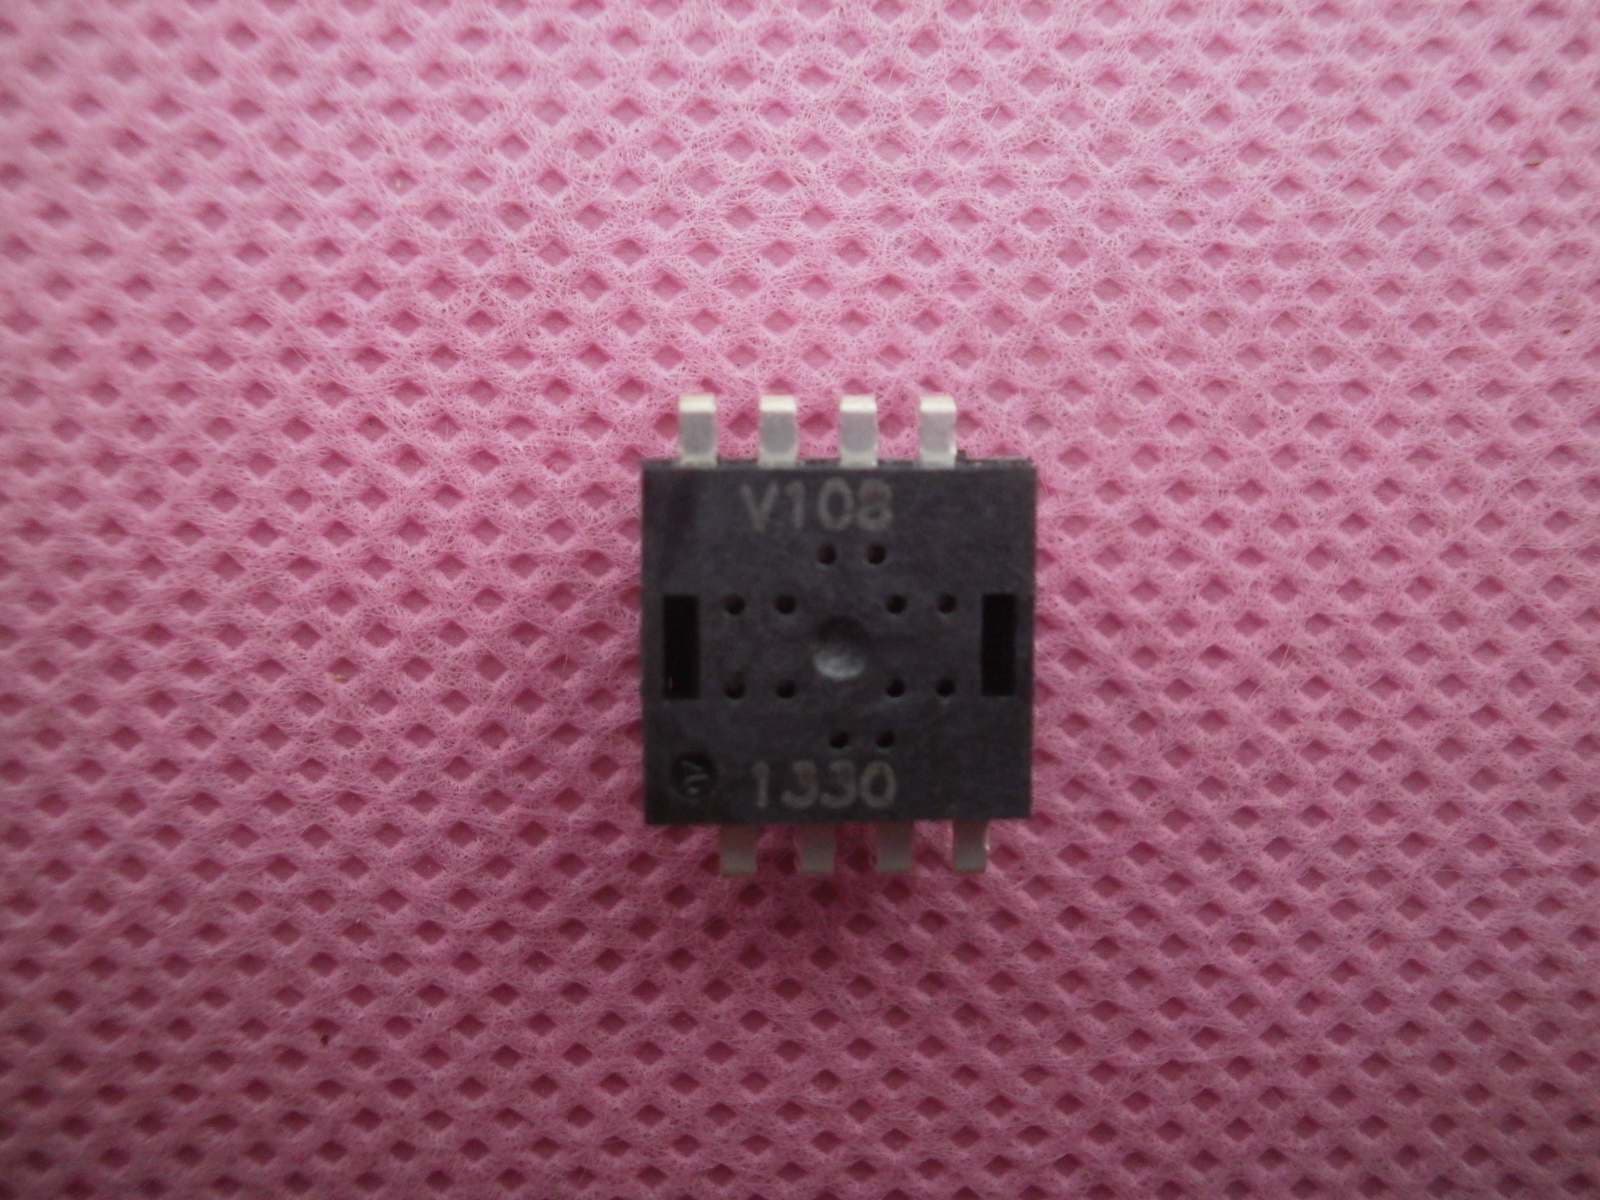 Wireless mouse IC KA8_V108_MX8650_ DIP8L_ 3_6keys